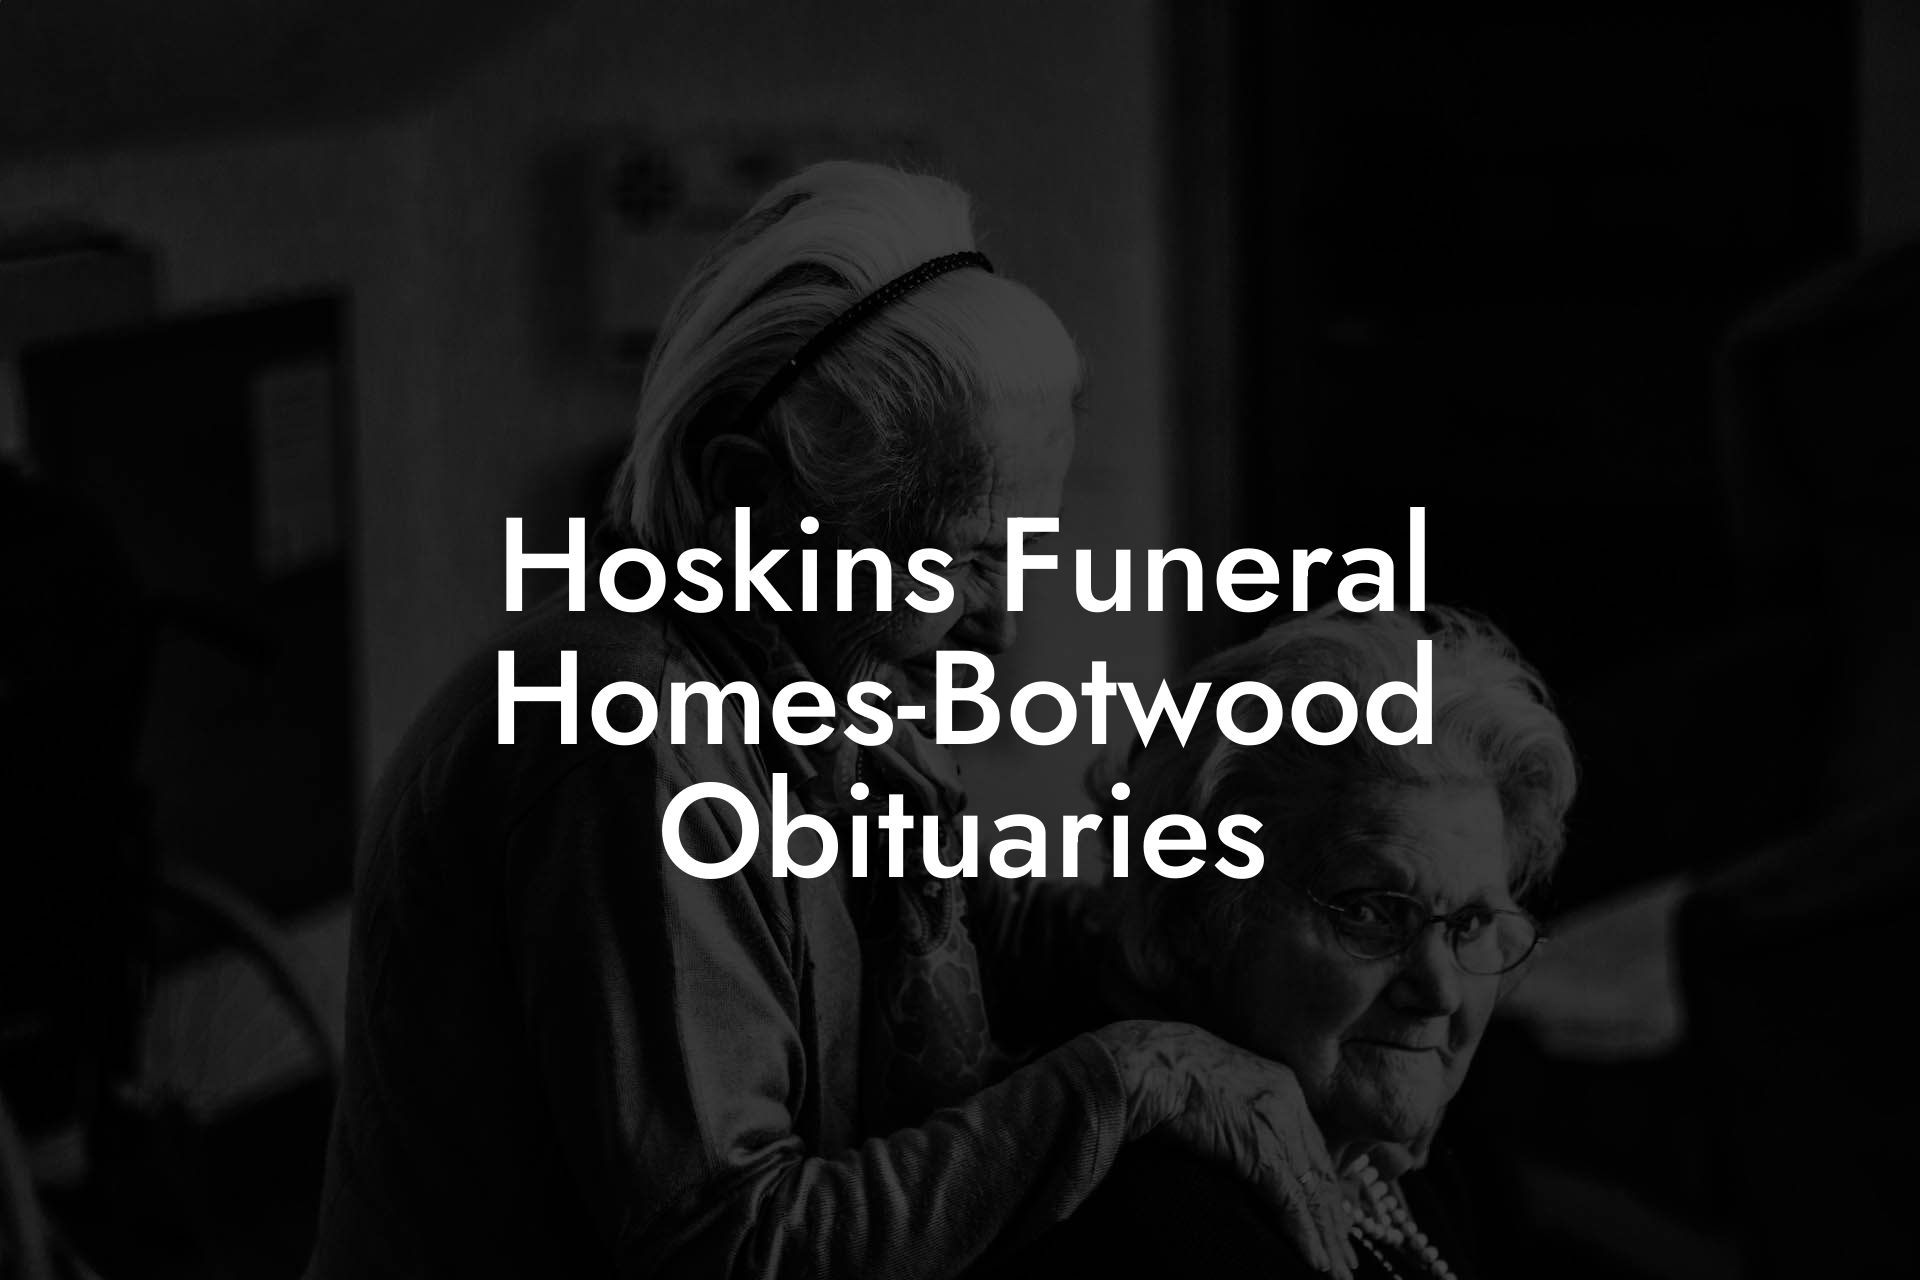 Hoskins Funeral Homes-Botwood Obituaries